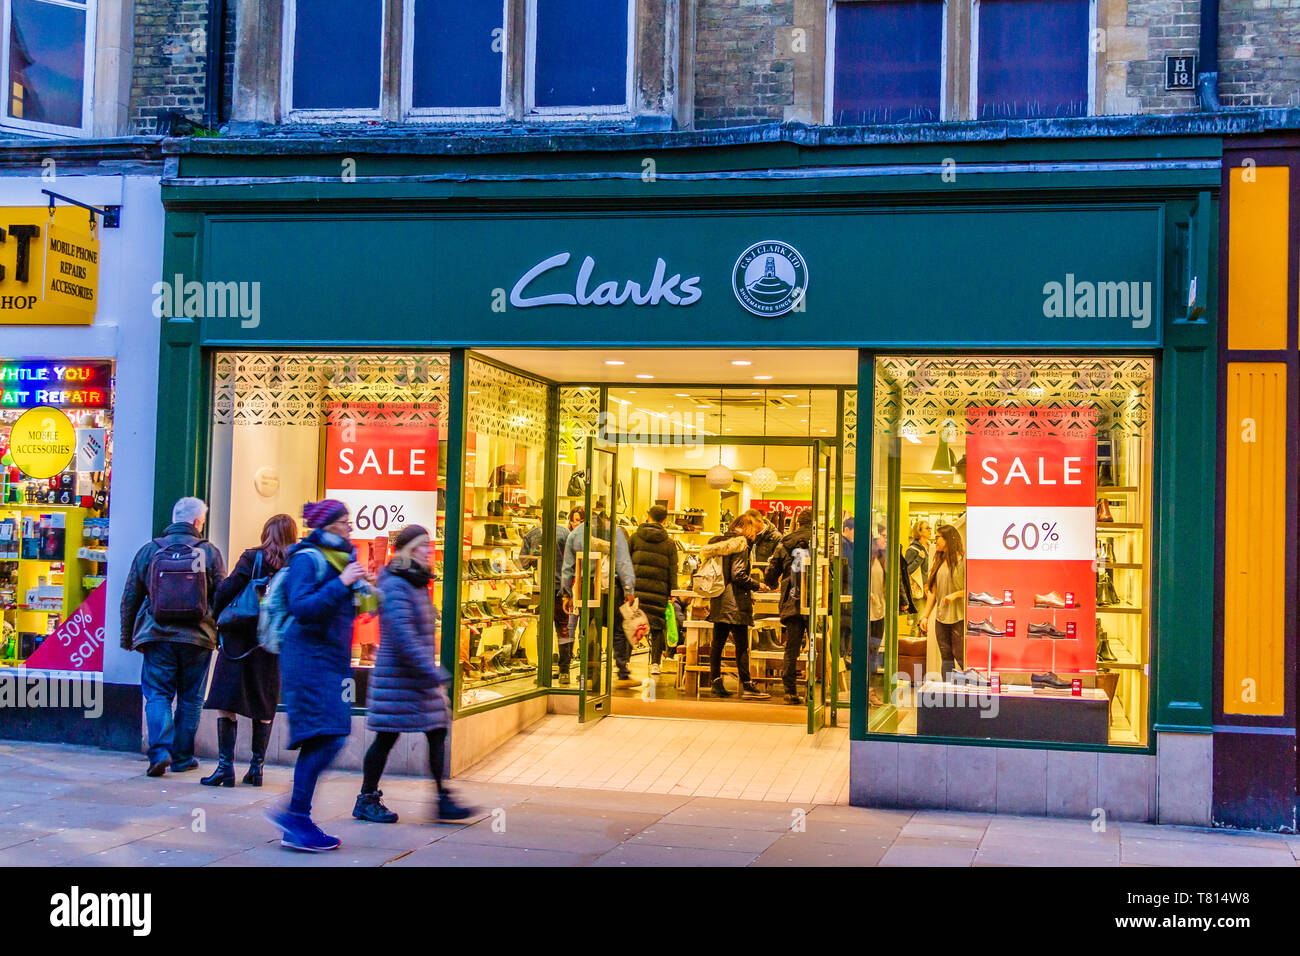 clarks shoes shop oxford street